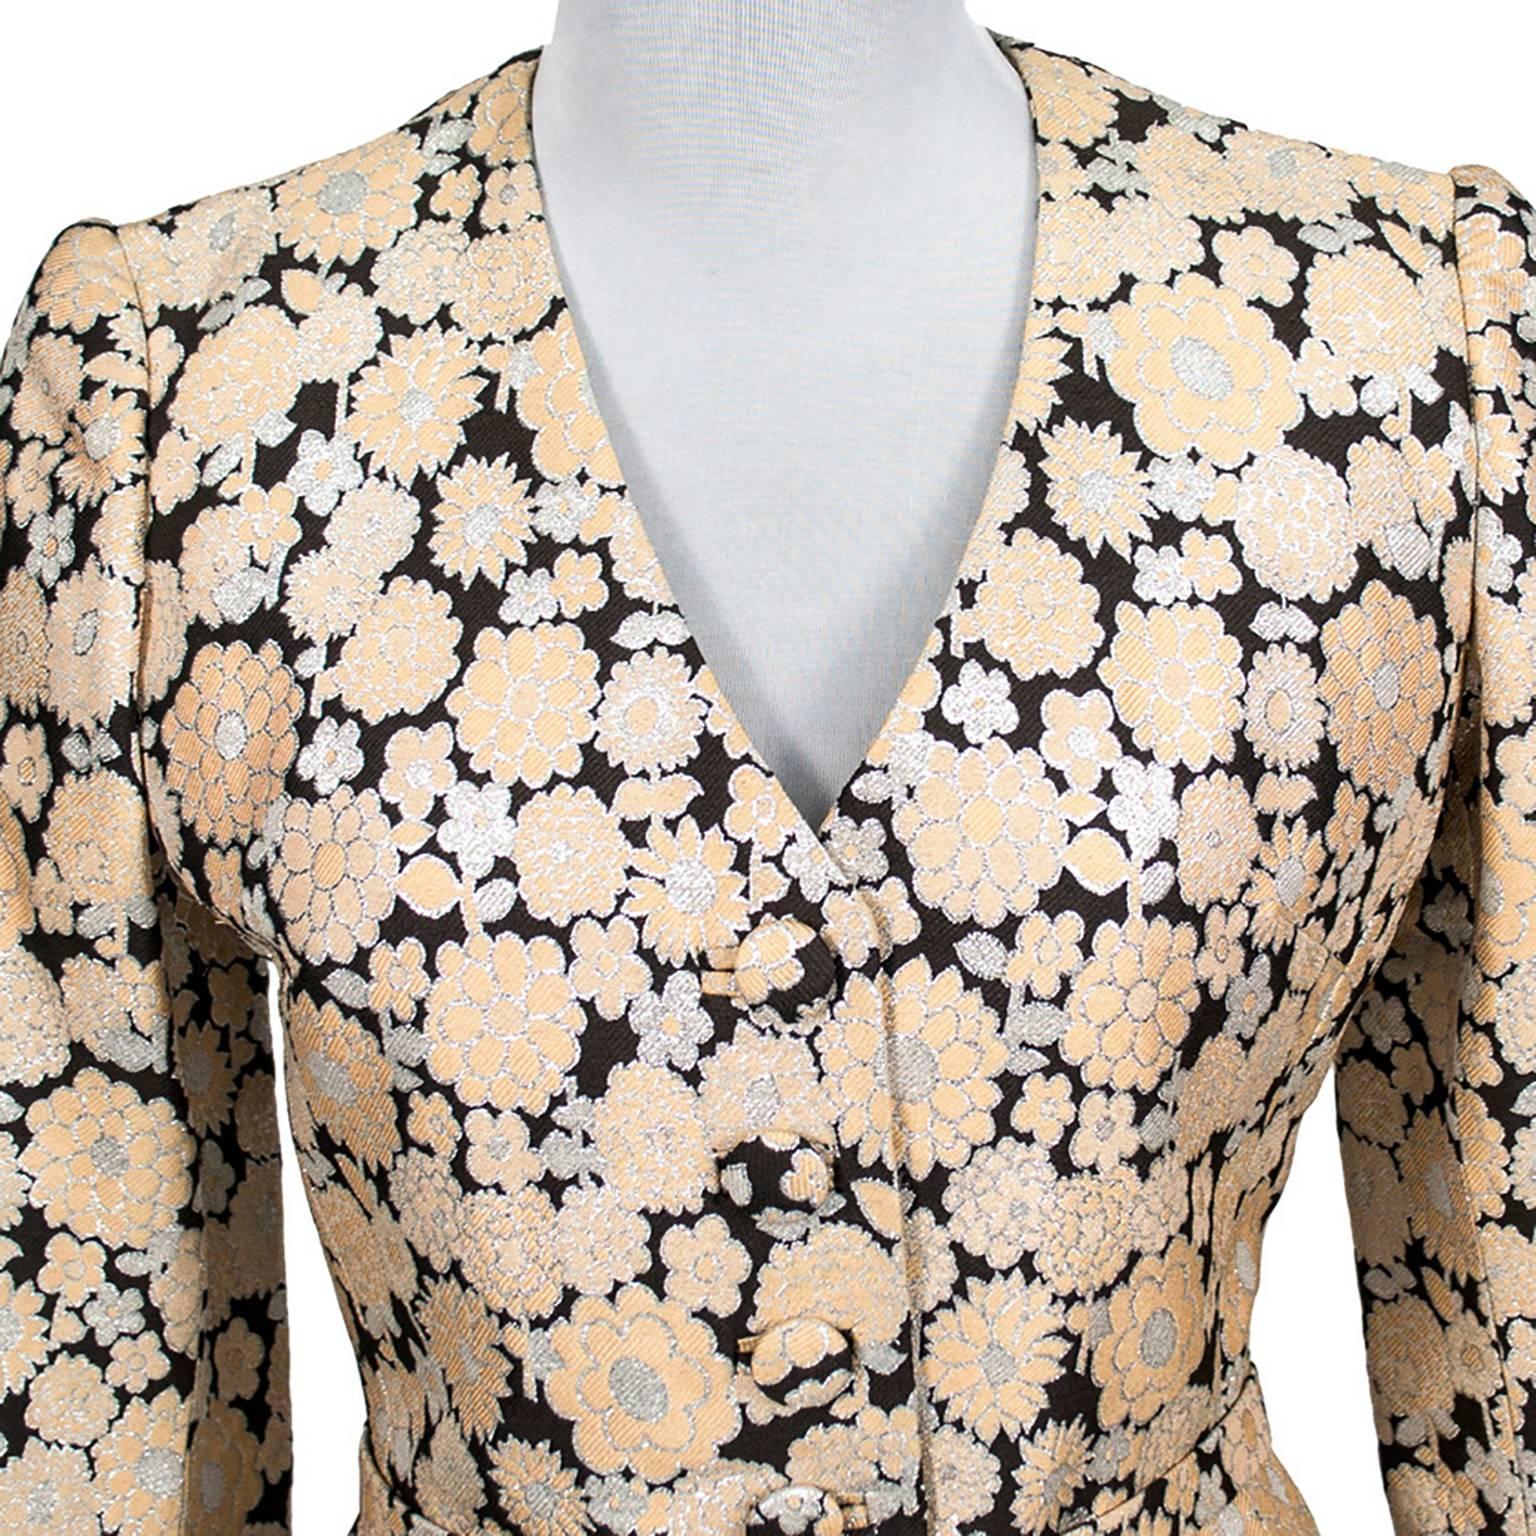 Women's 1960s Metallic Vintage Brocade Skirt Suit from Prominent Estate Size 4/6